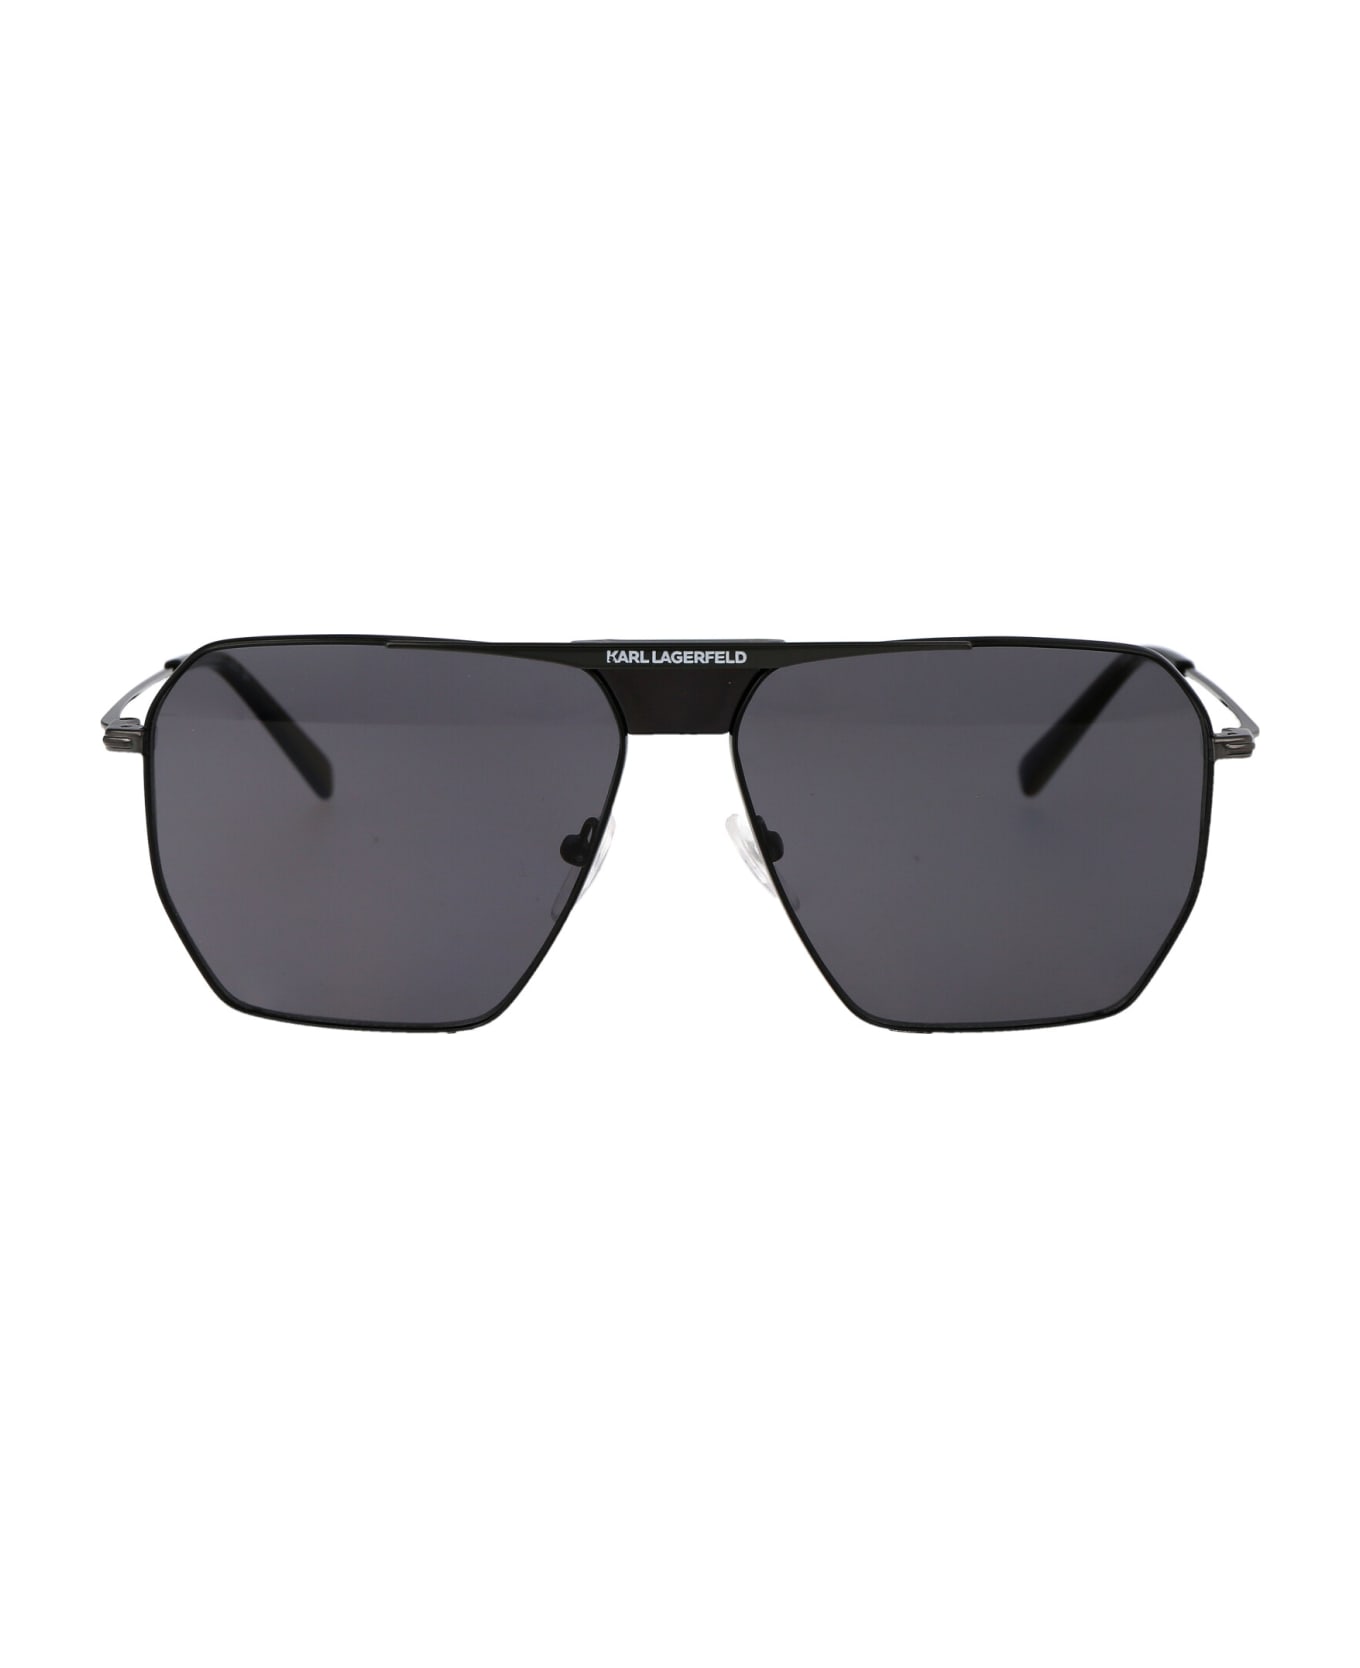 Karl Lagerfeld Kl350s Sunglasses - 001 SHINY BLACK